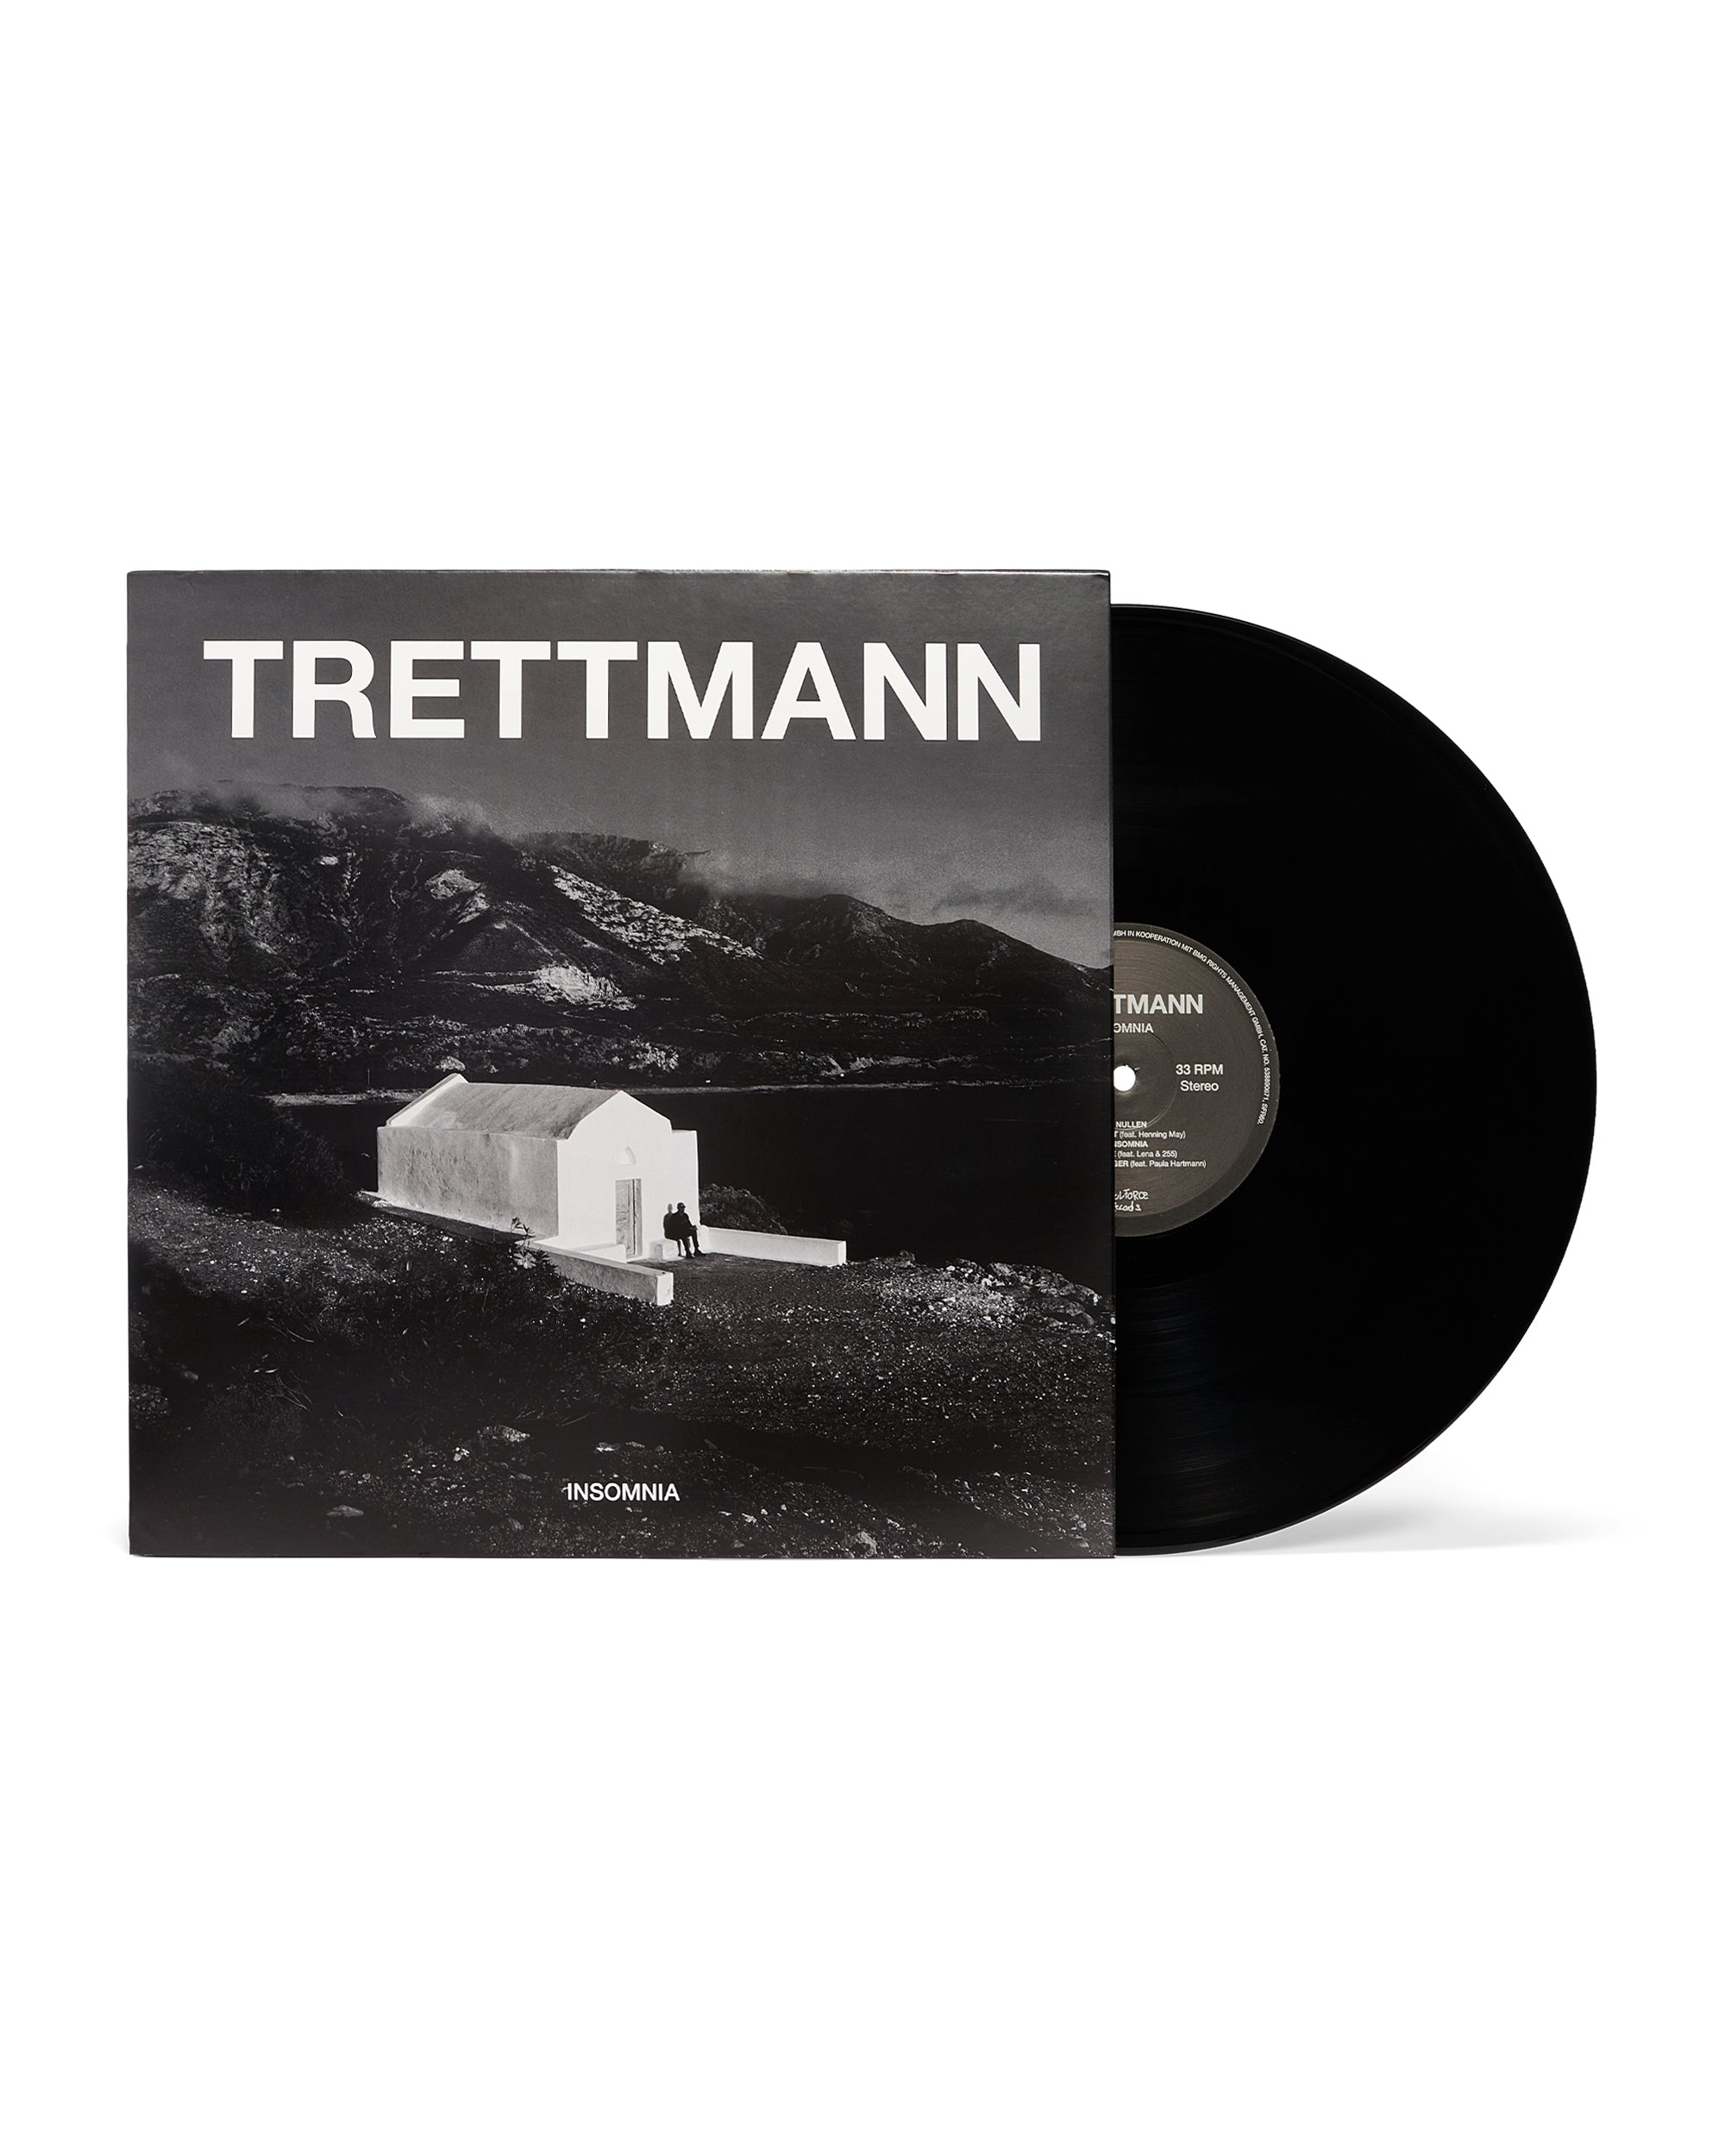 TRETTMANN "INSOMNIA" ALBUM – BUNDLE (VINYL)